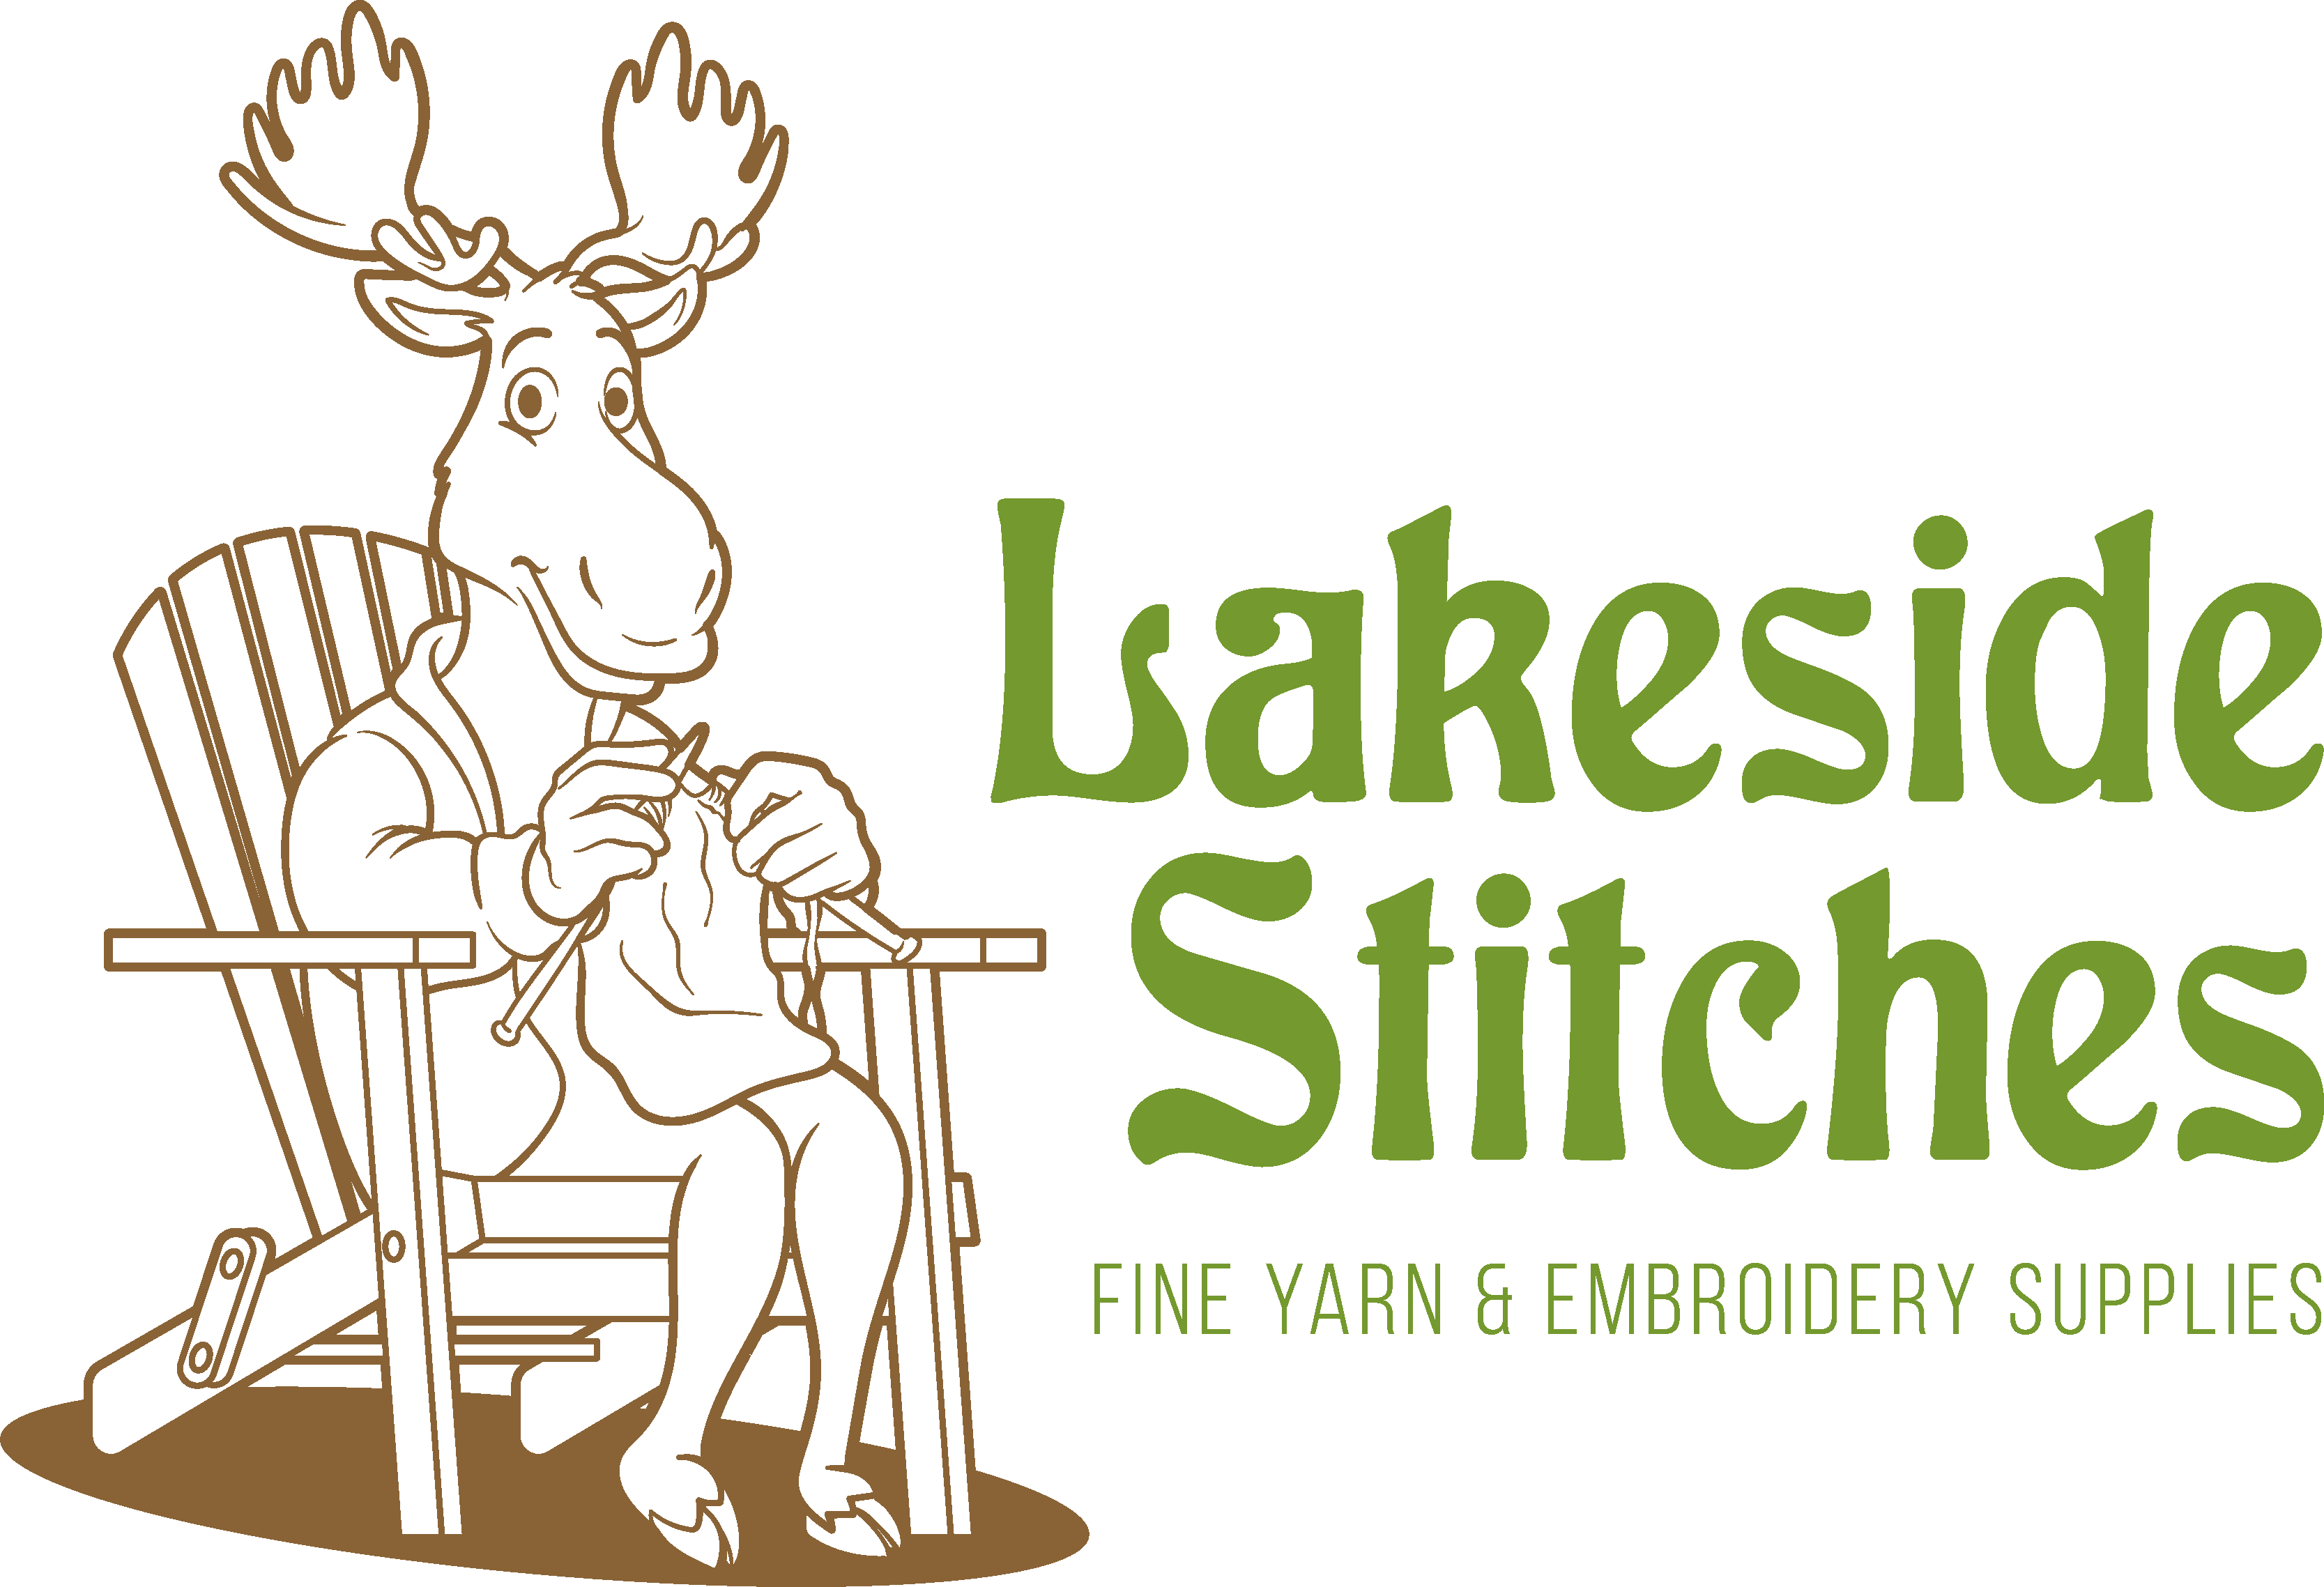 Lakeside Stitches